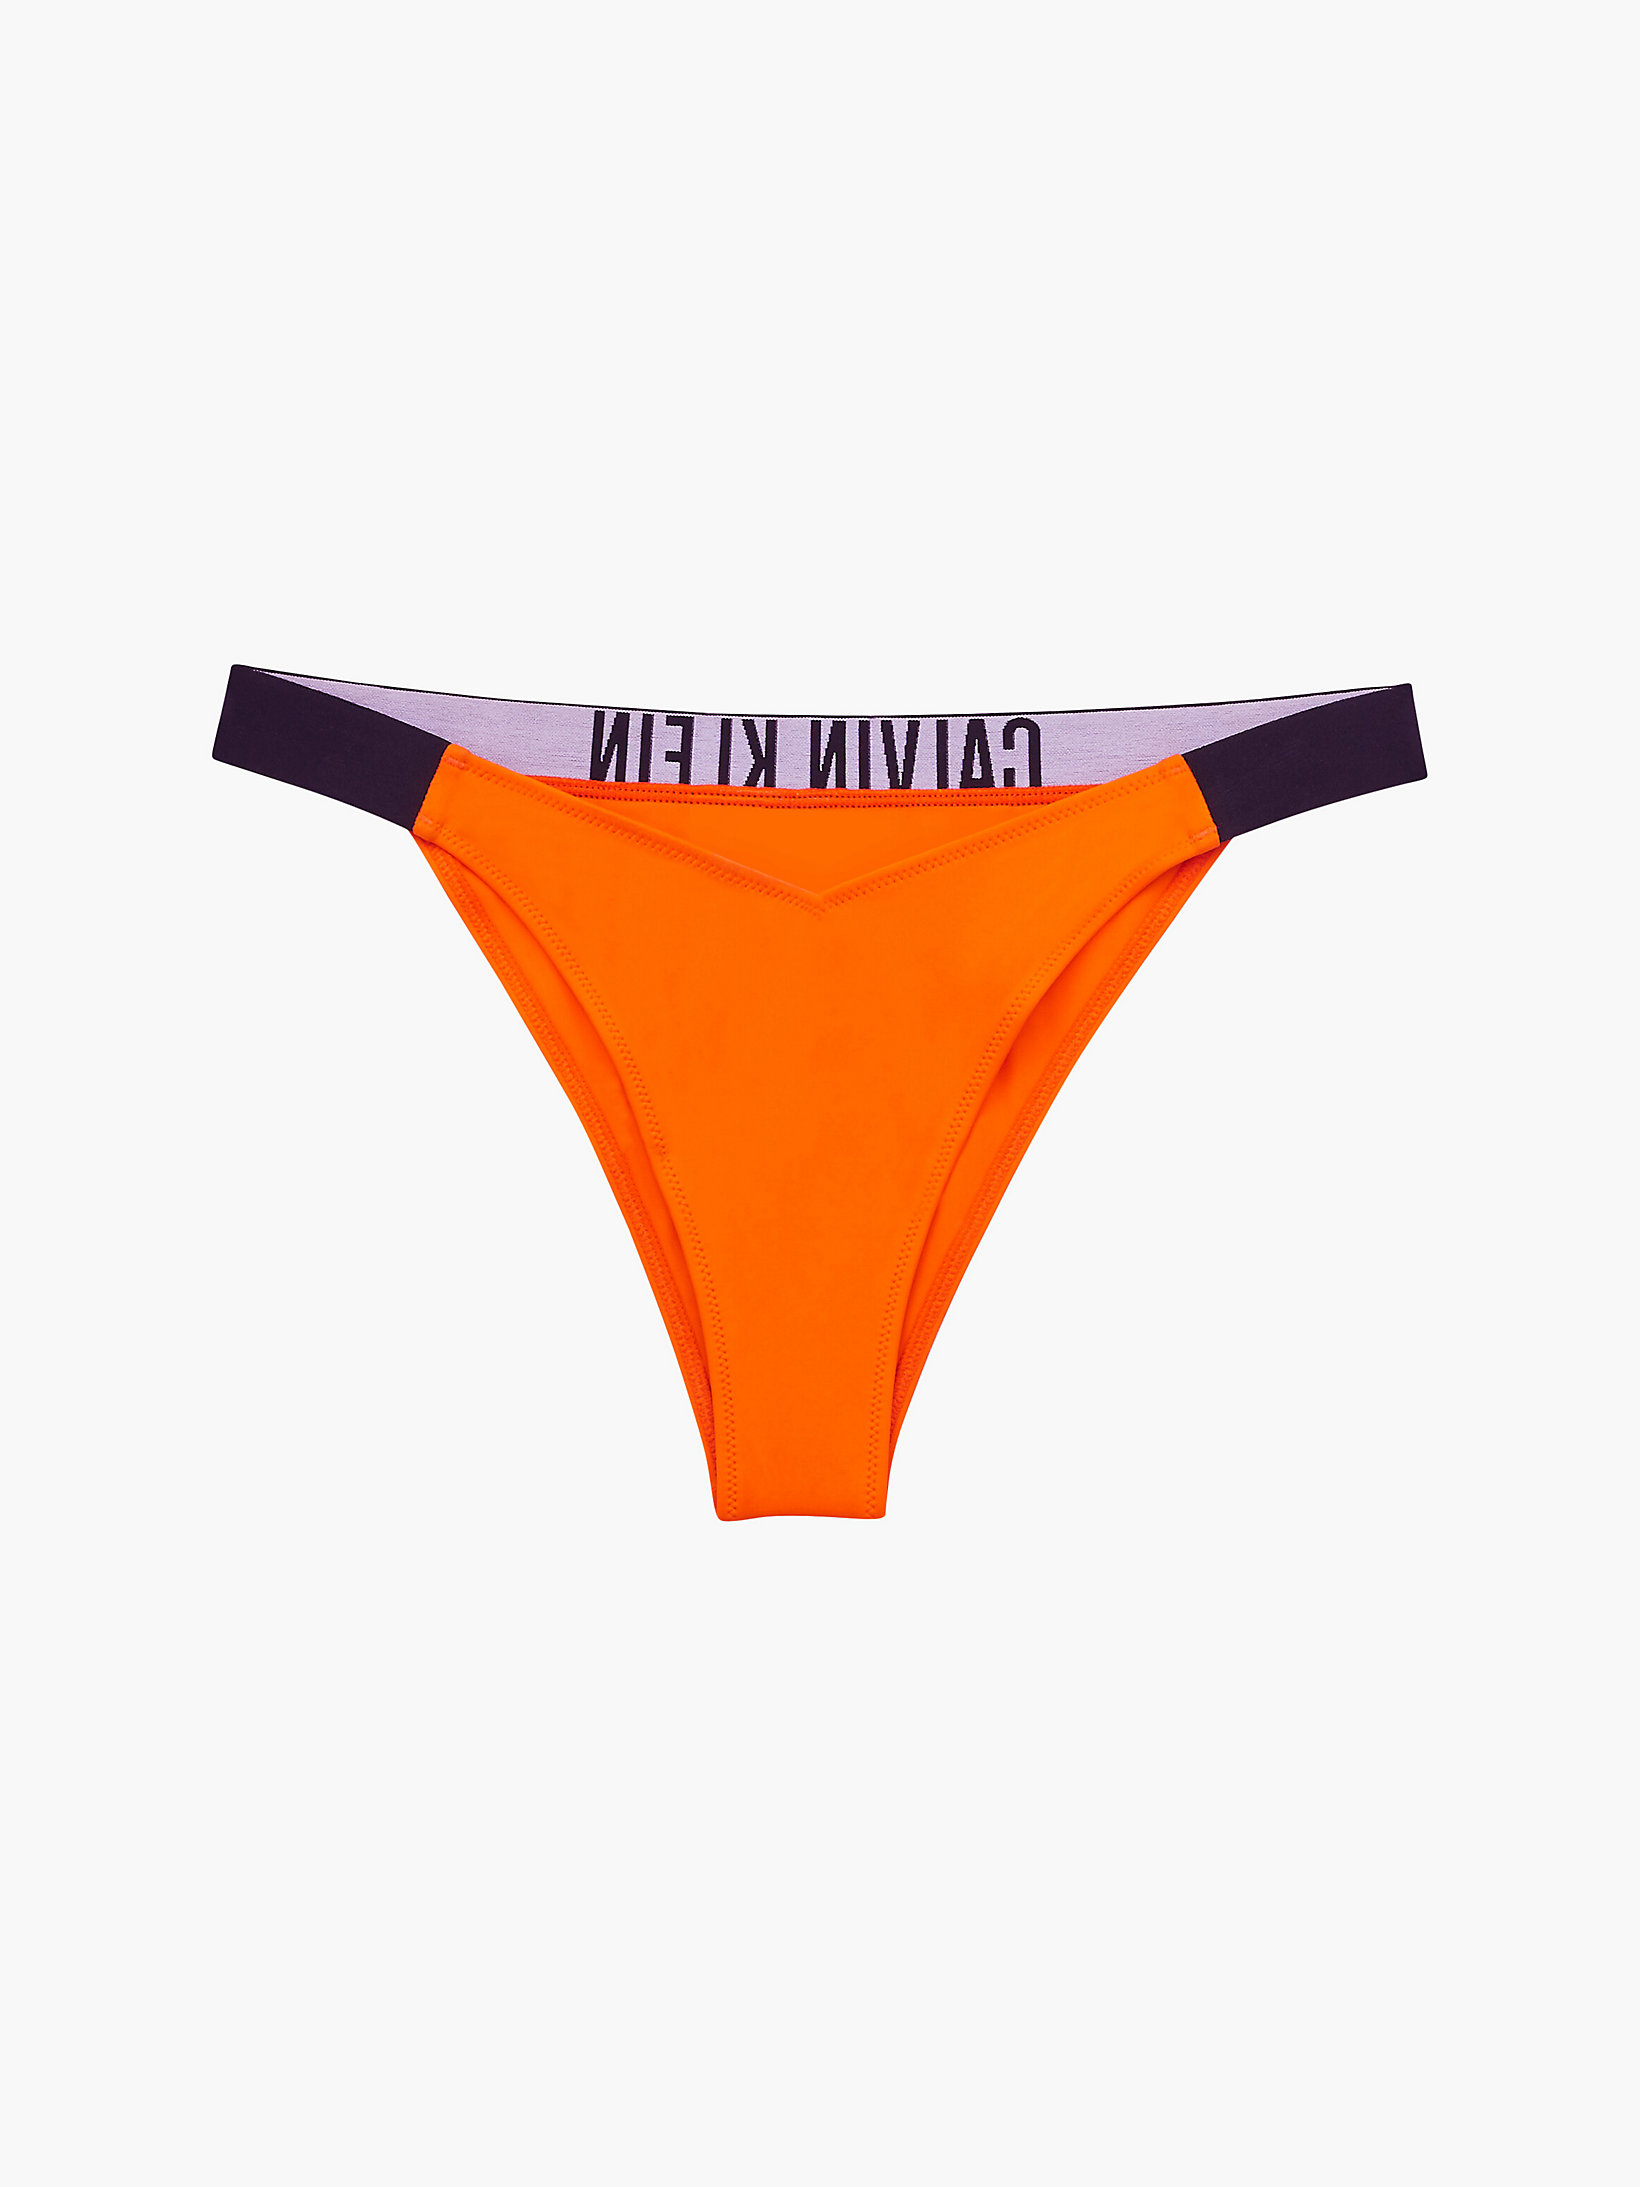 Vivid Orange Bikini Bottom - Intense Power undefined women Calvin Klein